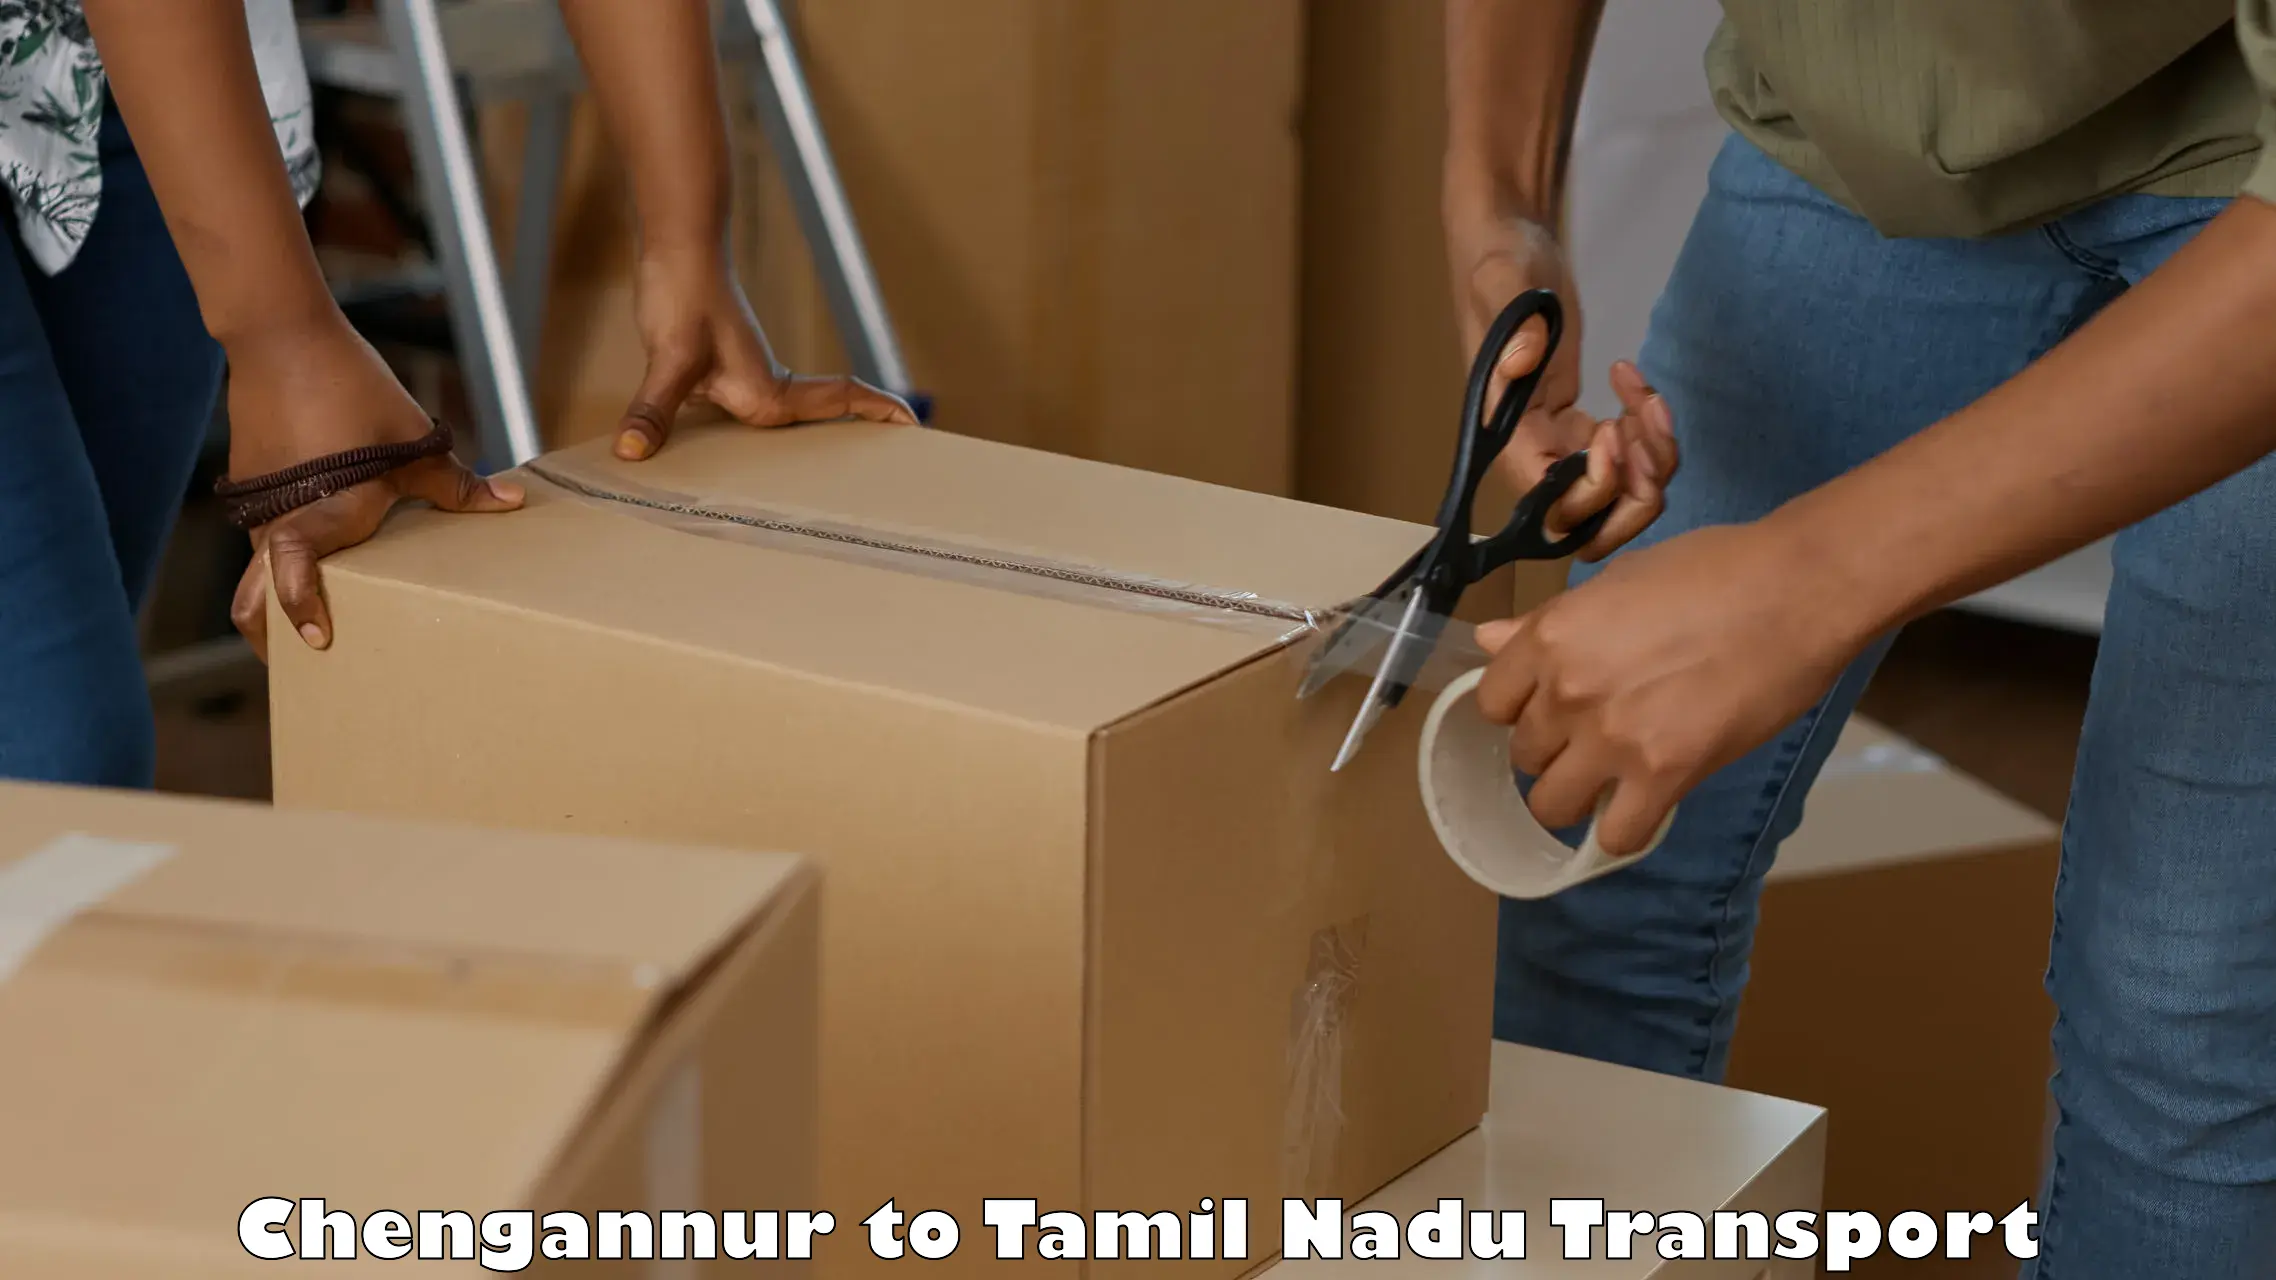 Transport in sharing Chengannur to Chennai